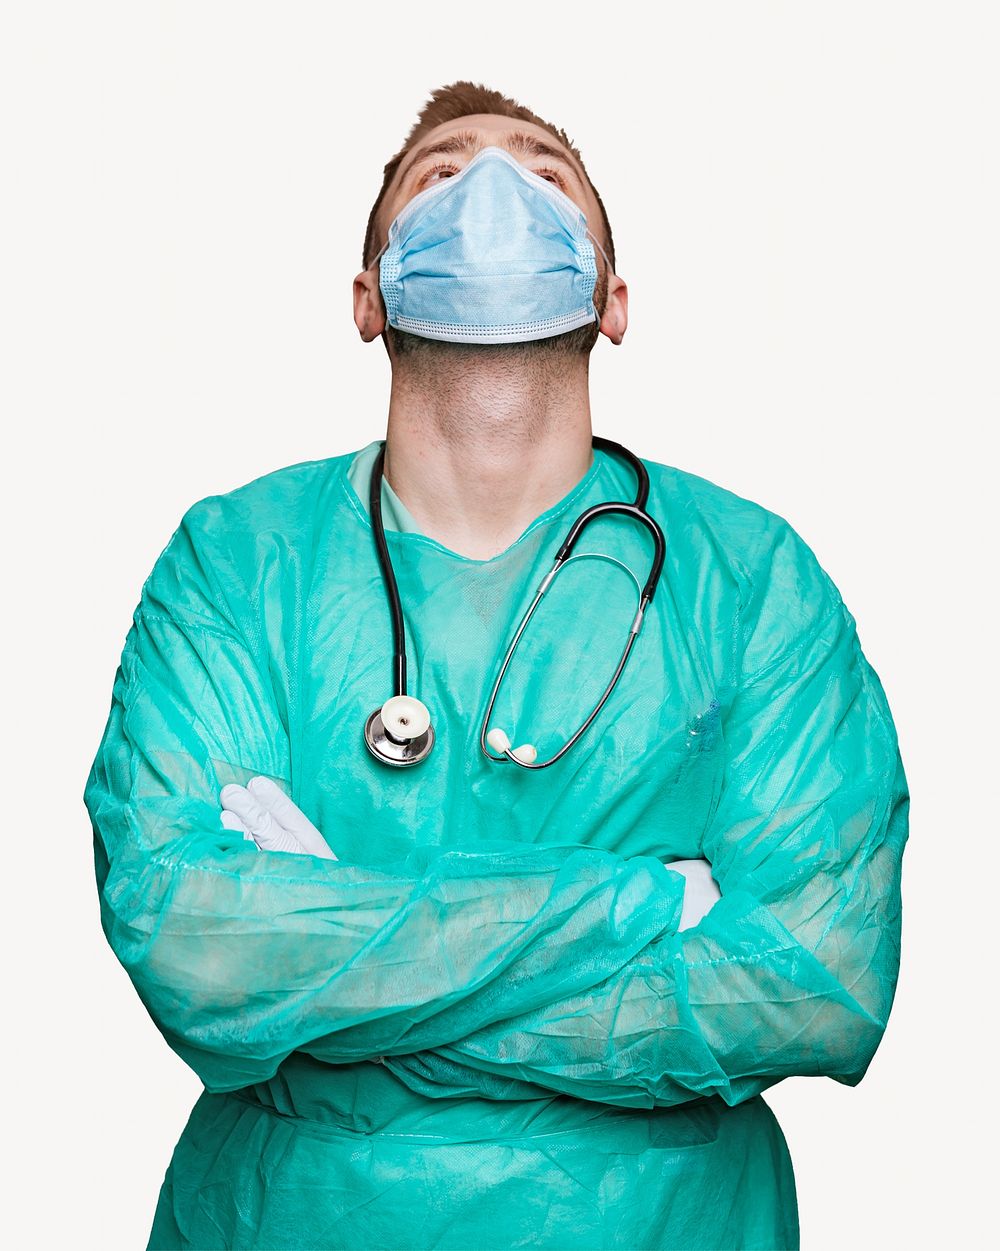 Medical hospital doctor isolated image